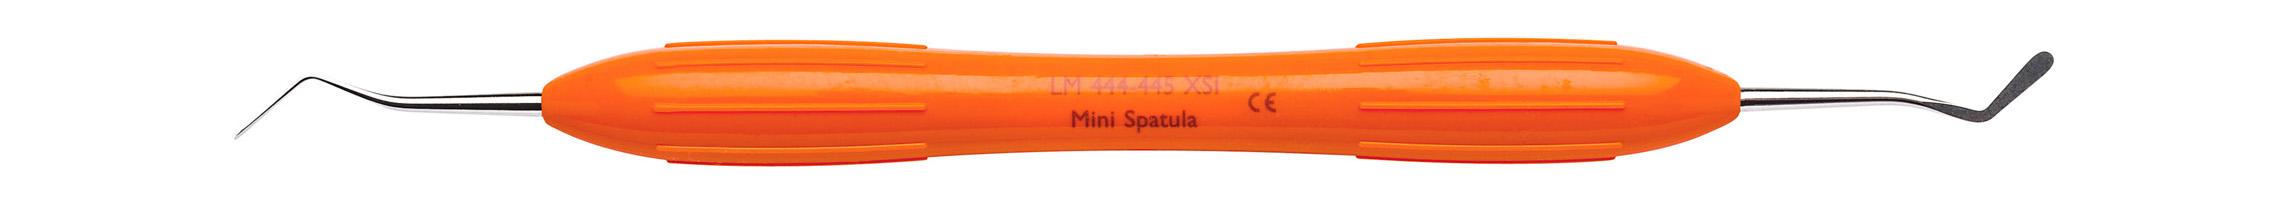 LM Mini Spatula